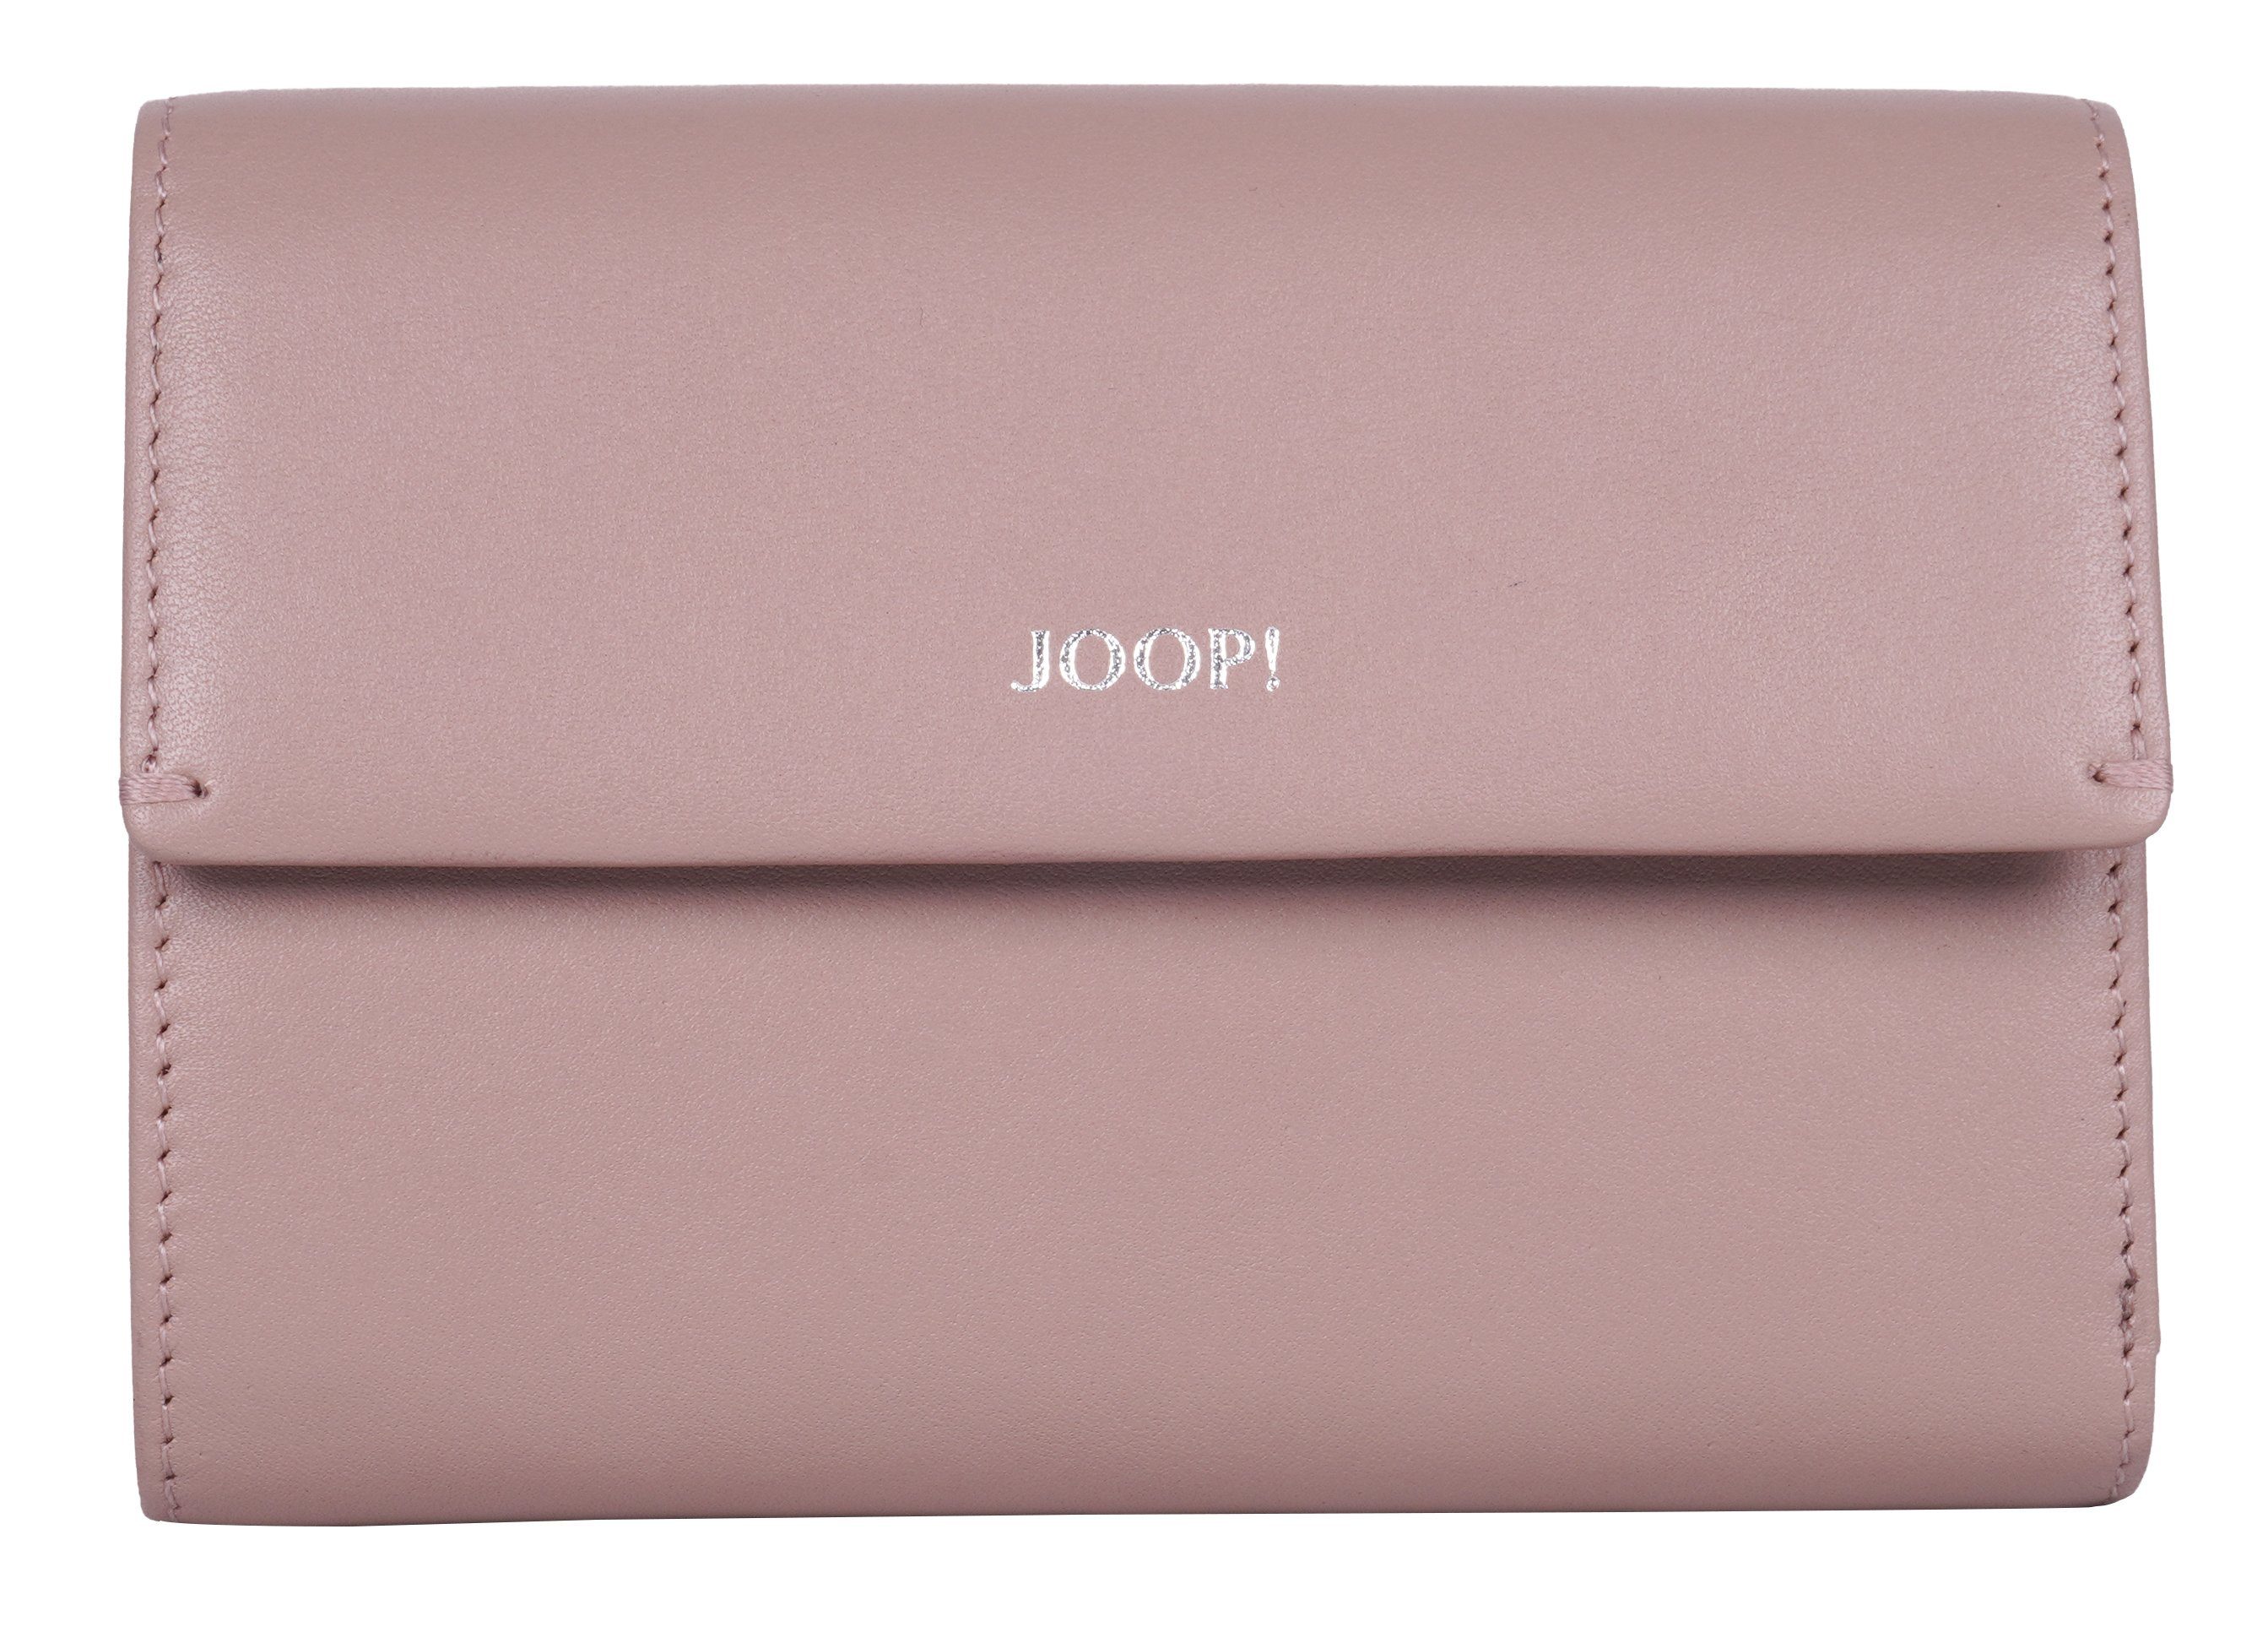 Joop! Geldbörse sofisticato 1.0 cosma purse mh10f, in schlichtem Design rosa